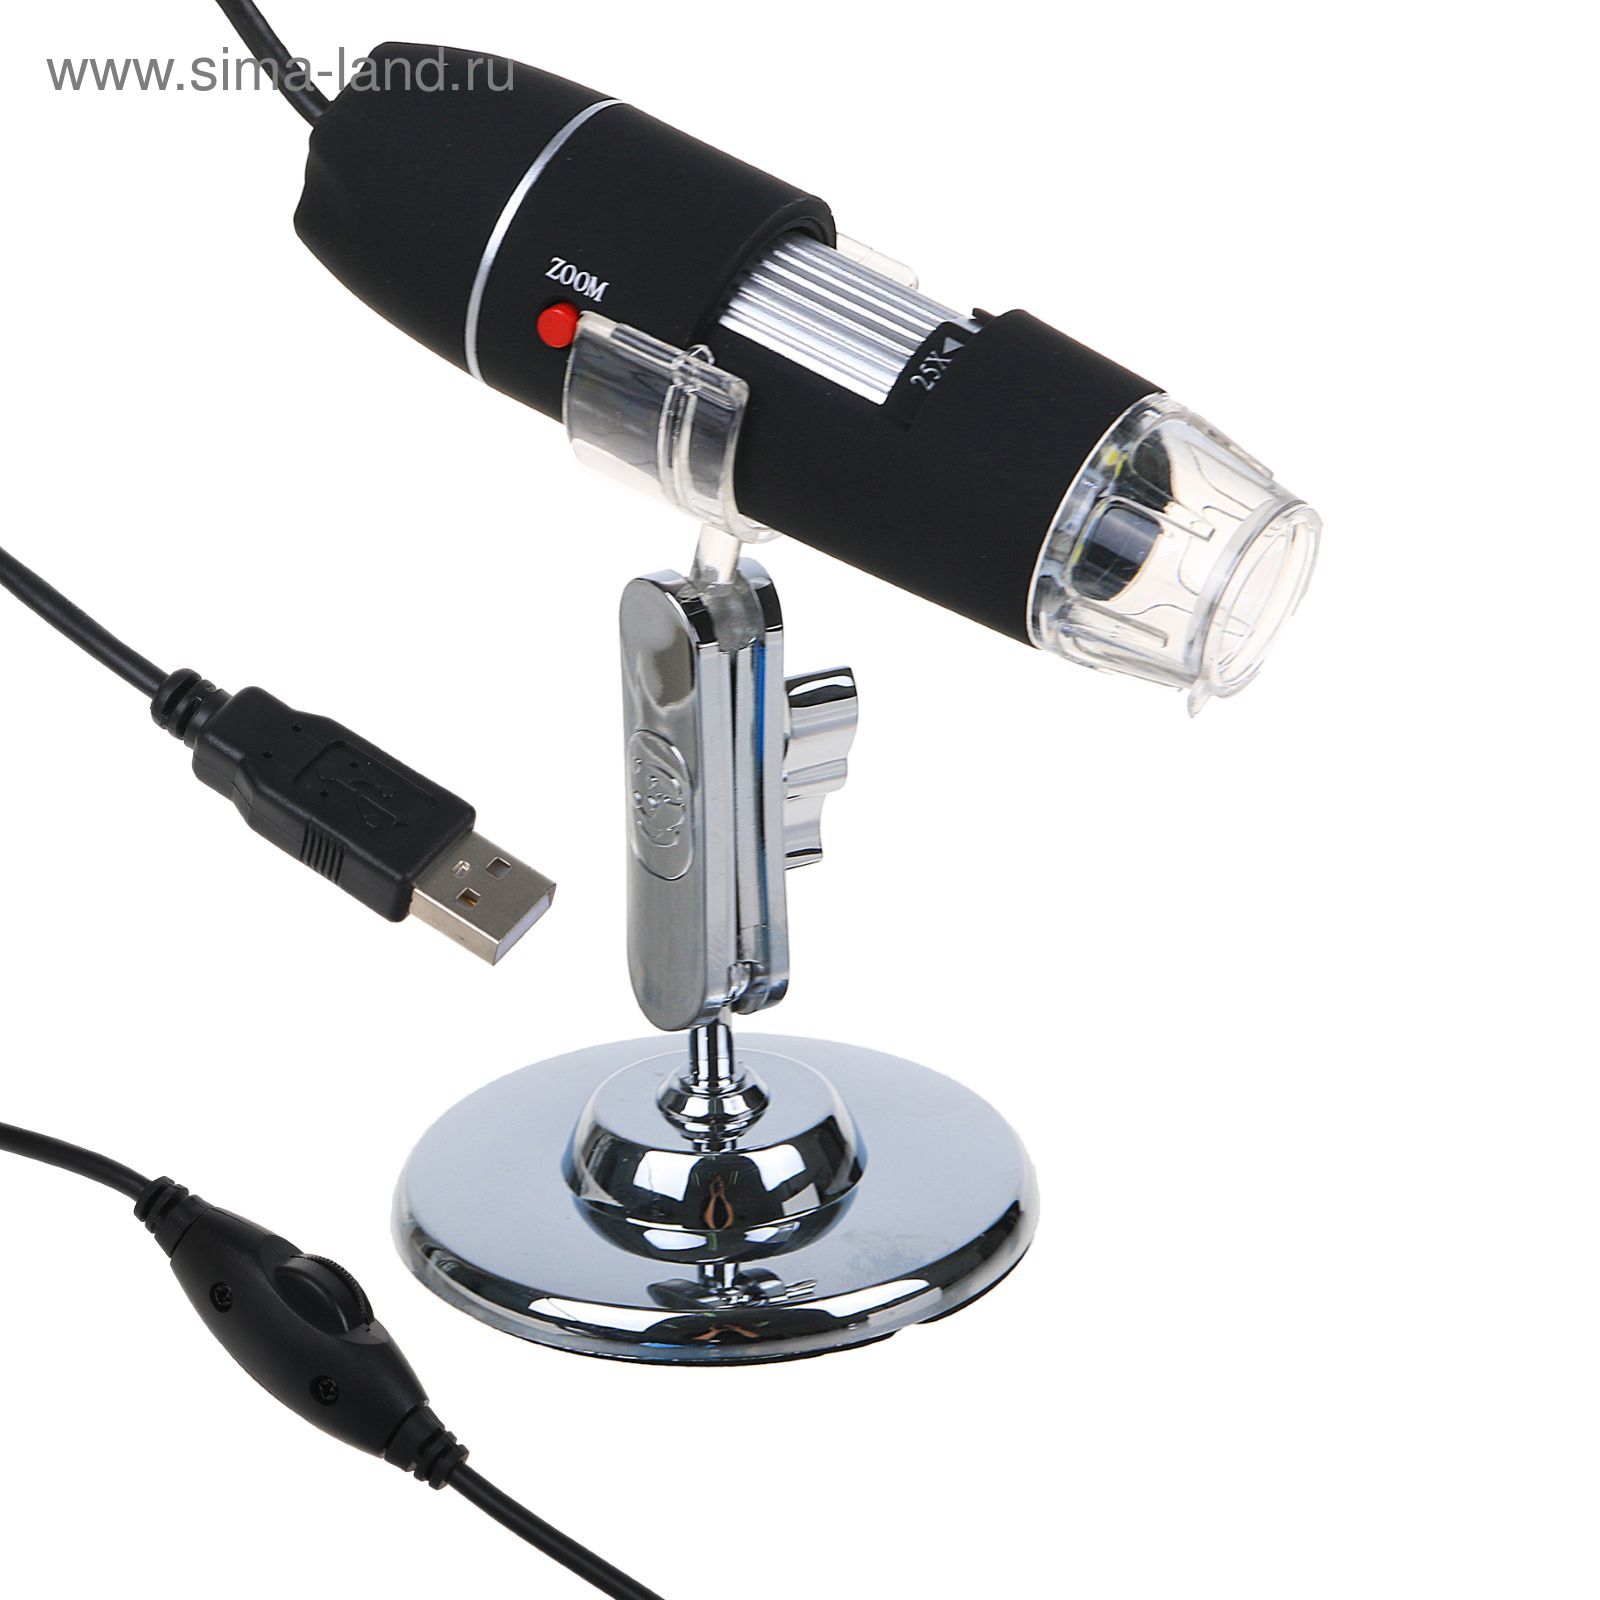 Микроскоп сувенирный "Техно" 10х-300х, 1,3Мп, от USB, с подсветкой